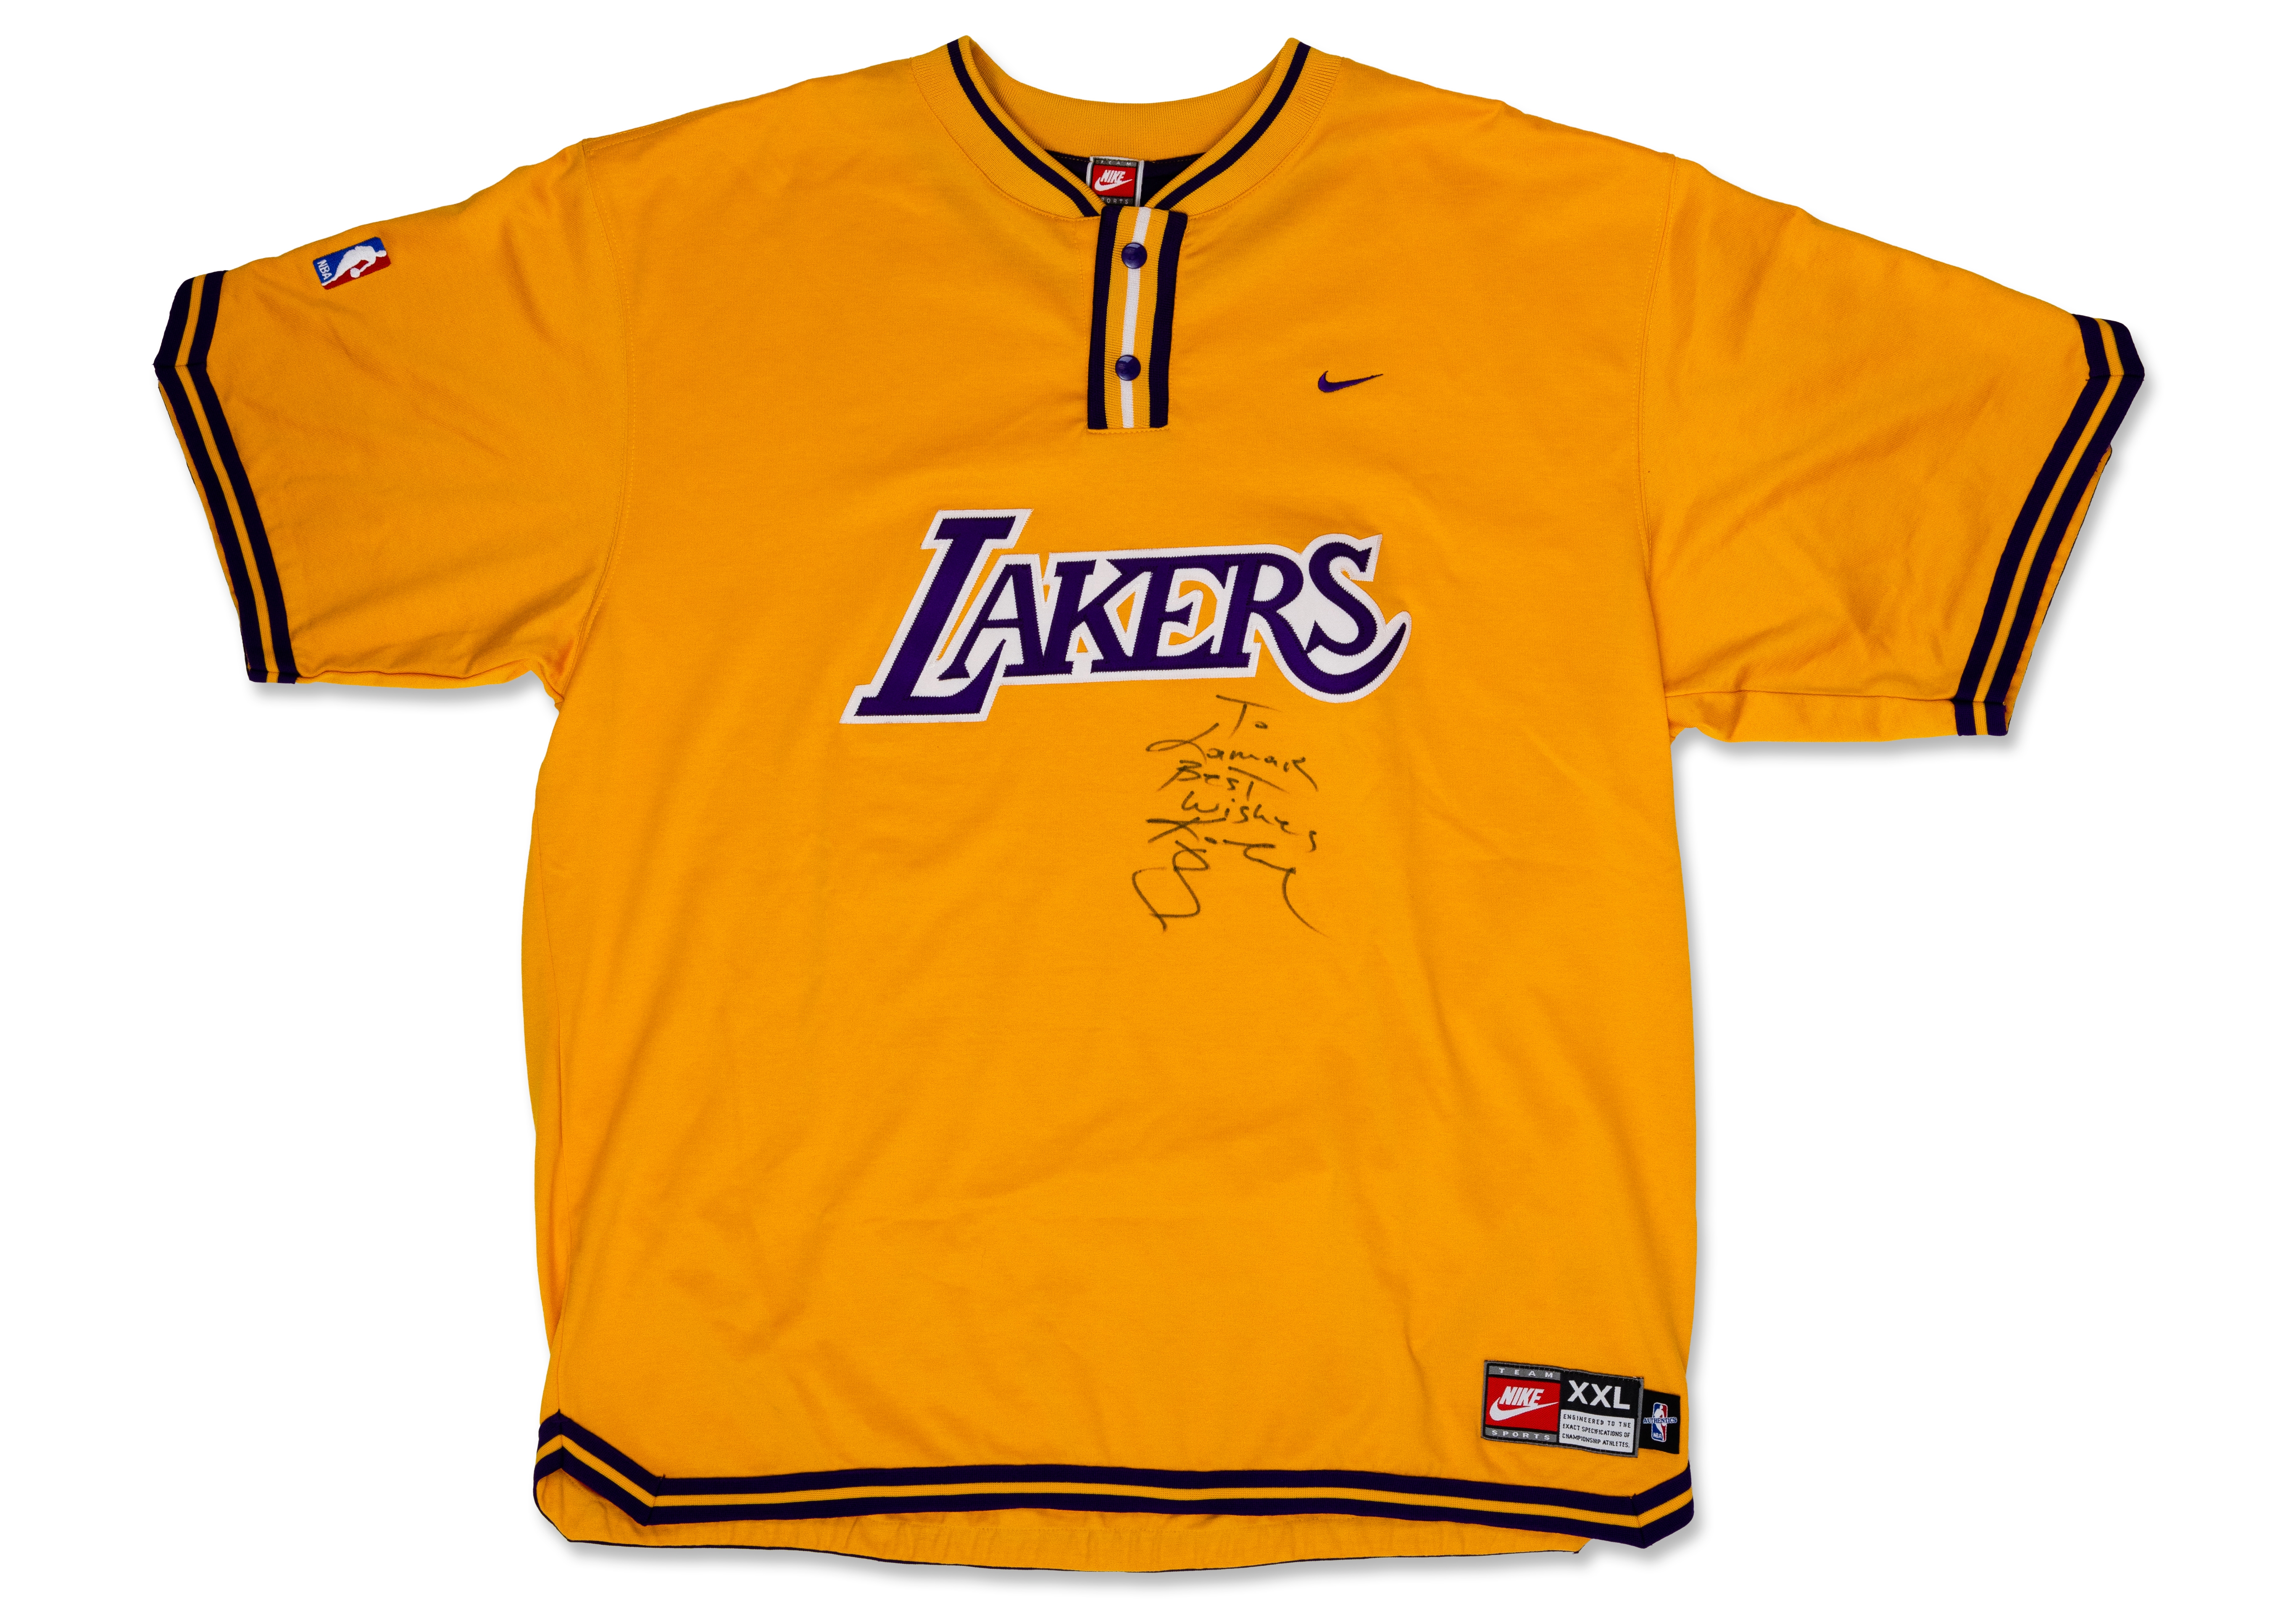 Kobe Bryant Slam Magazine 1998 Cover LA Lakers Cant Be Stopped T-Shirt